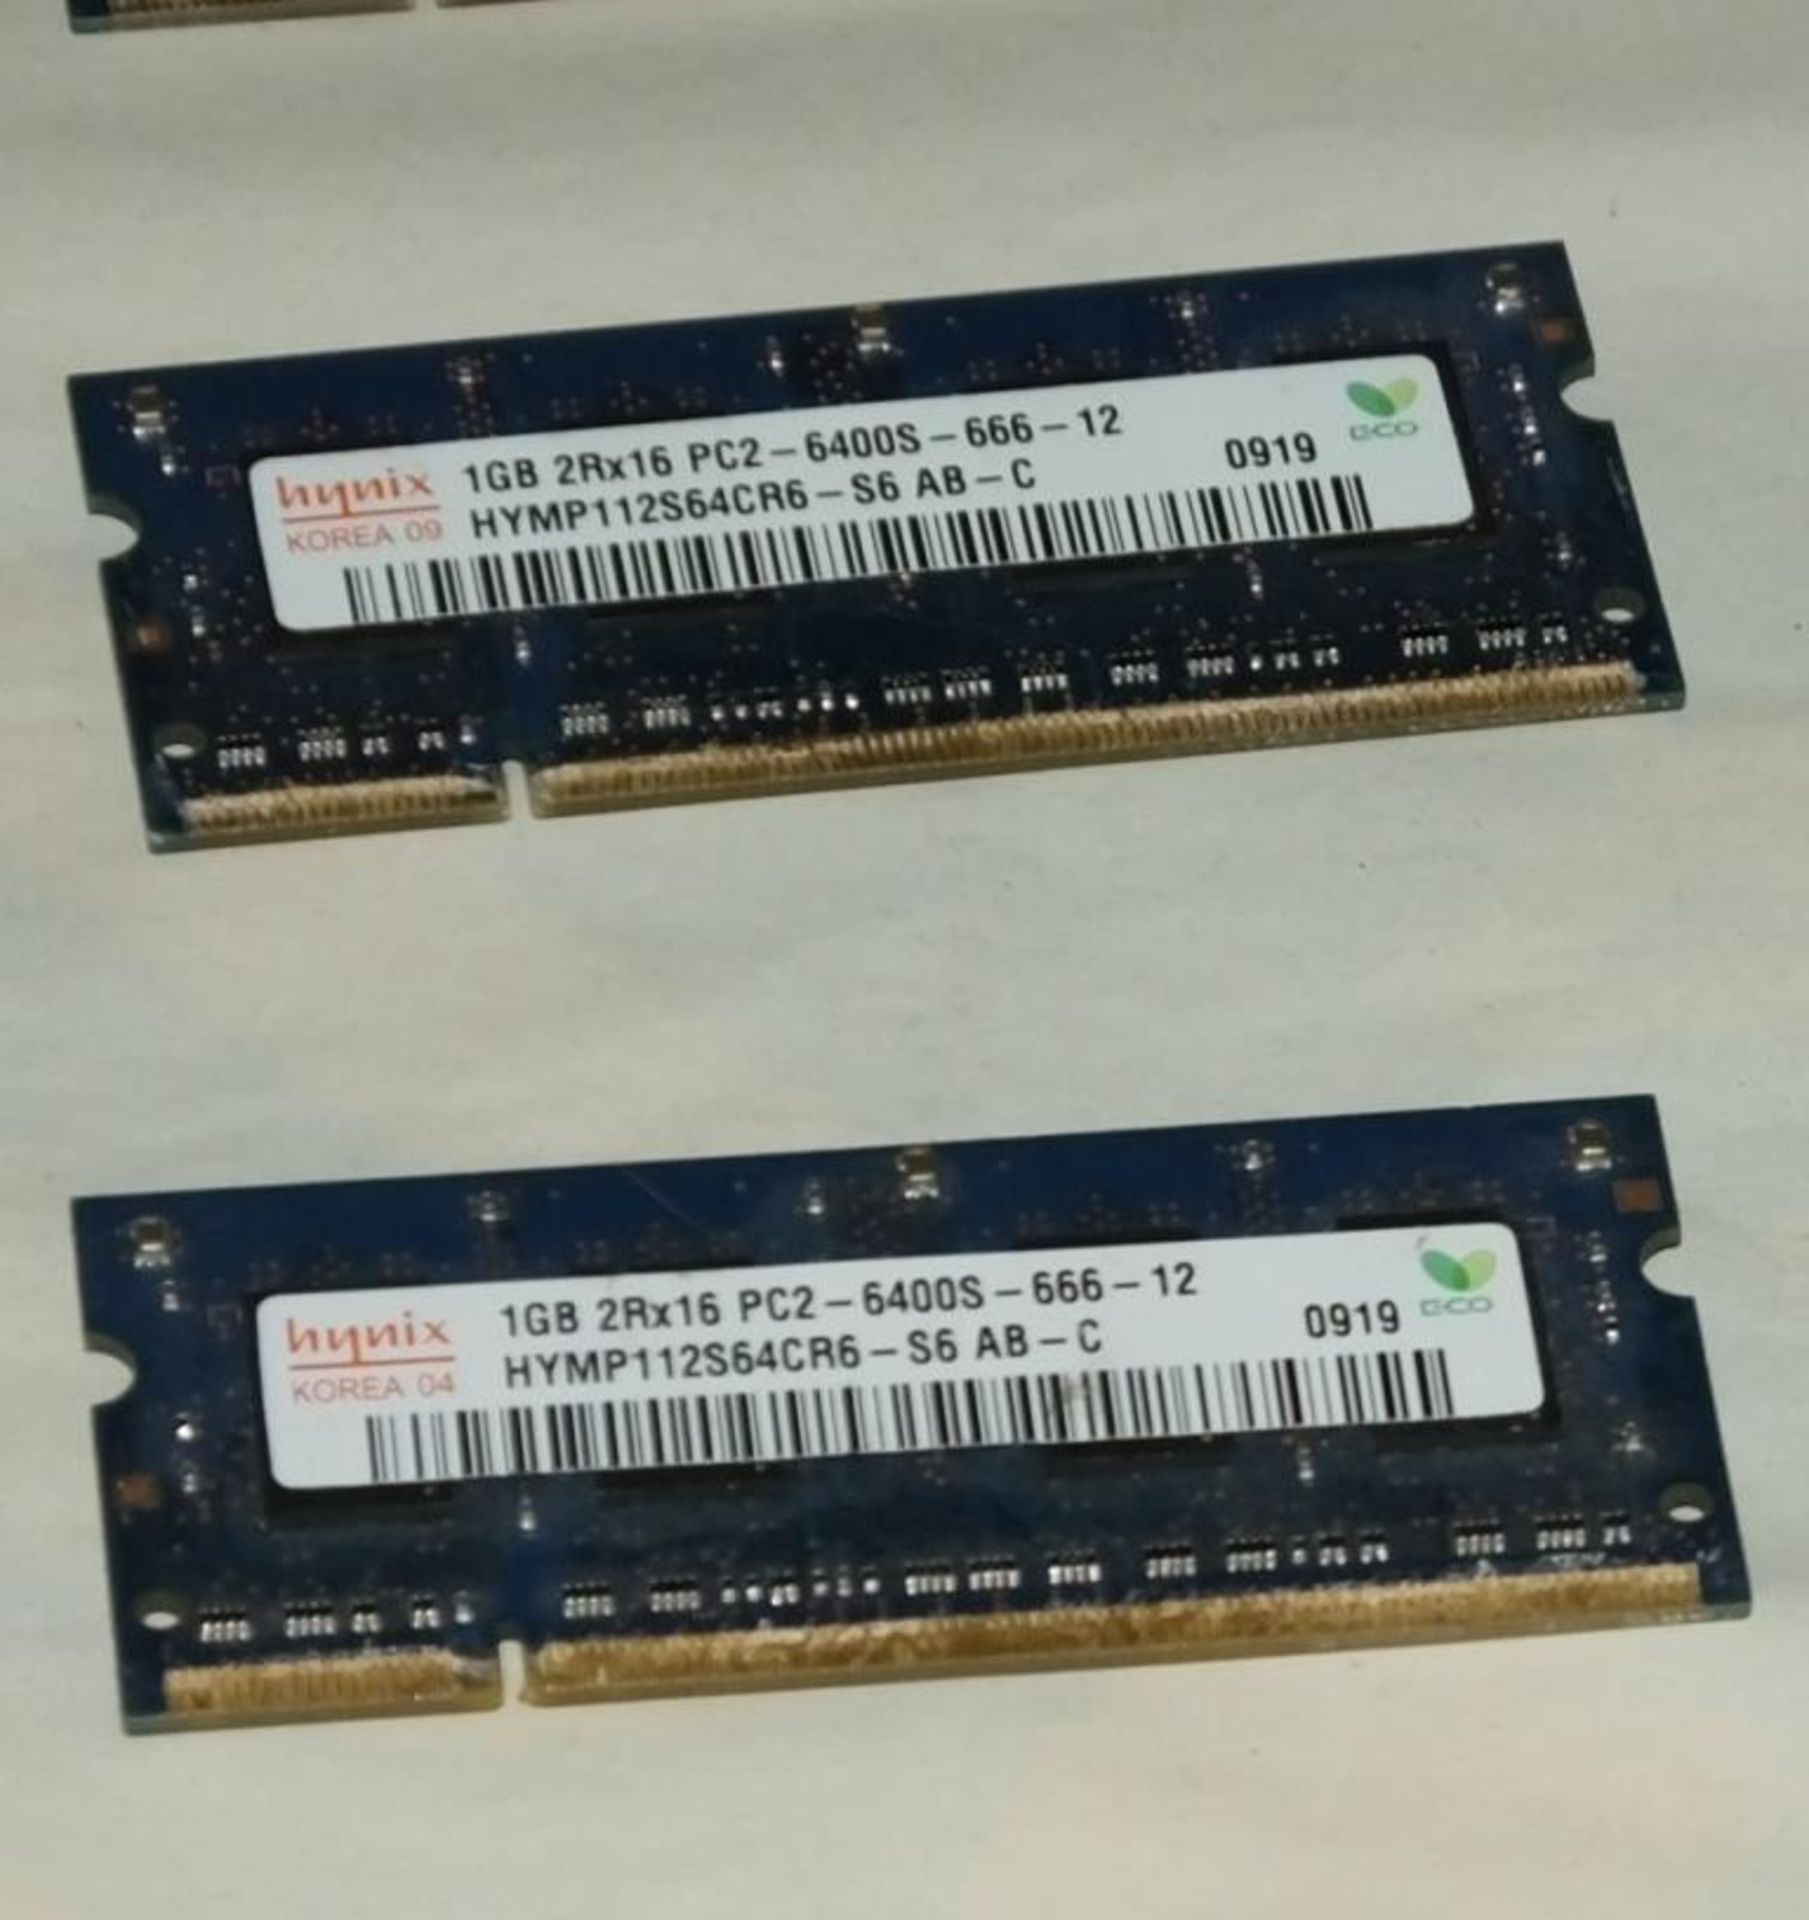 10x 1GB Memory Sticks. - Image 2 of 2